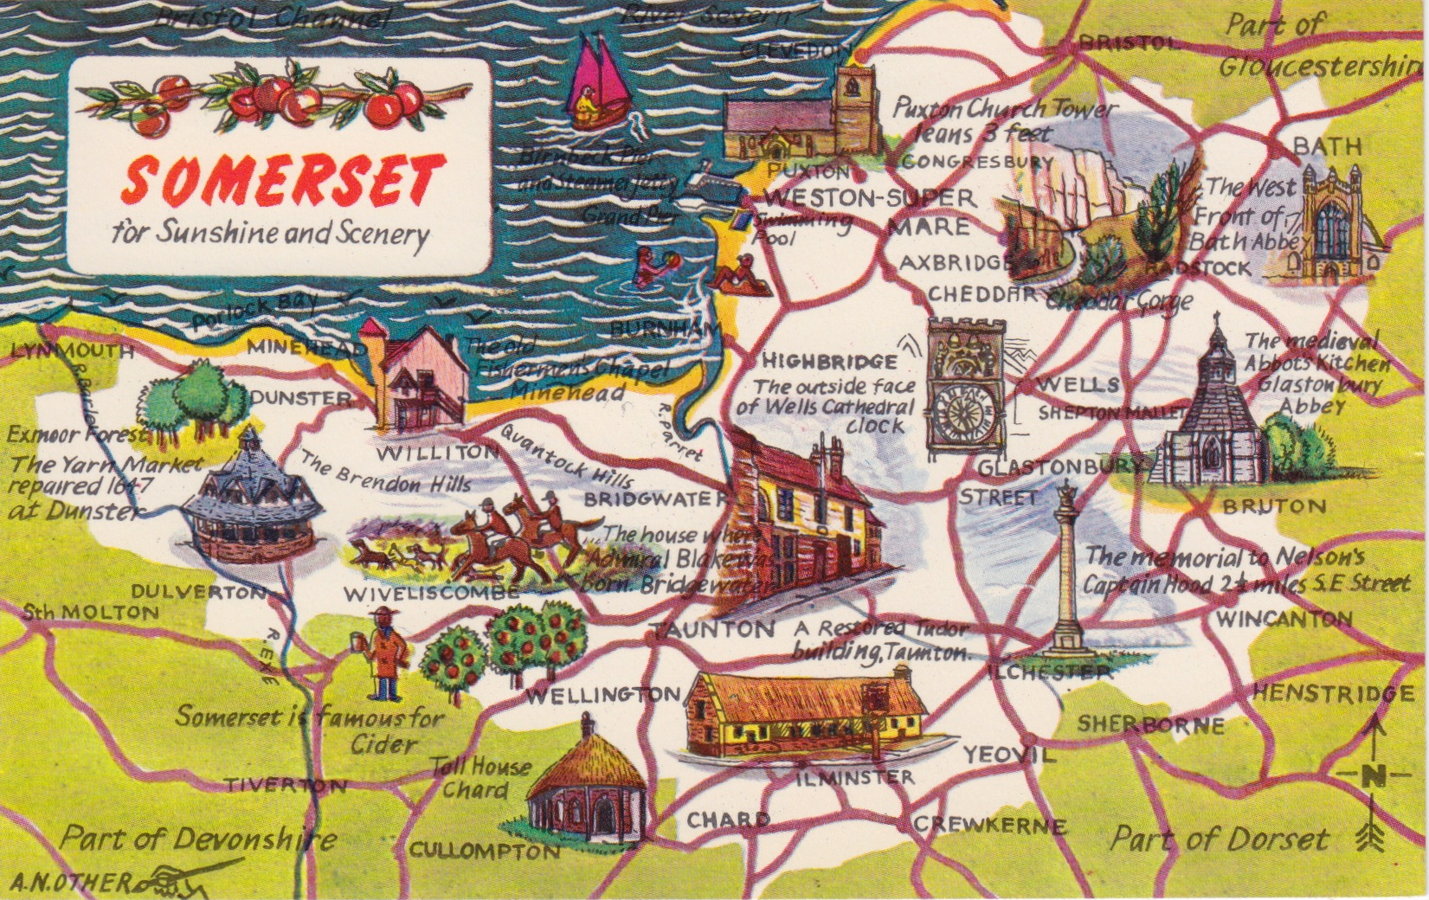 Somerset Postcard